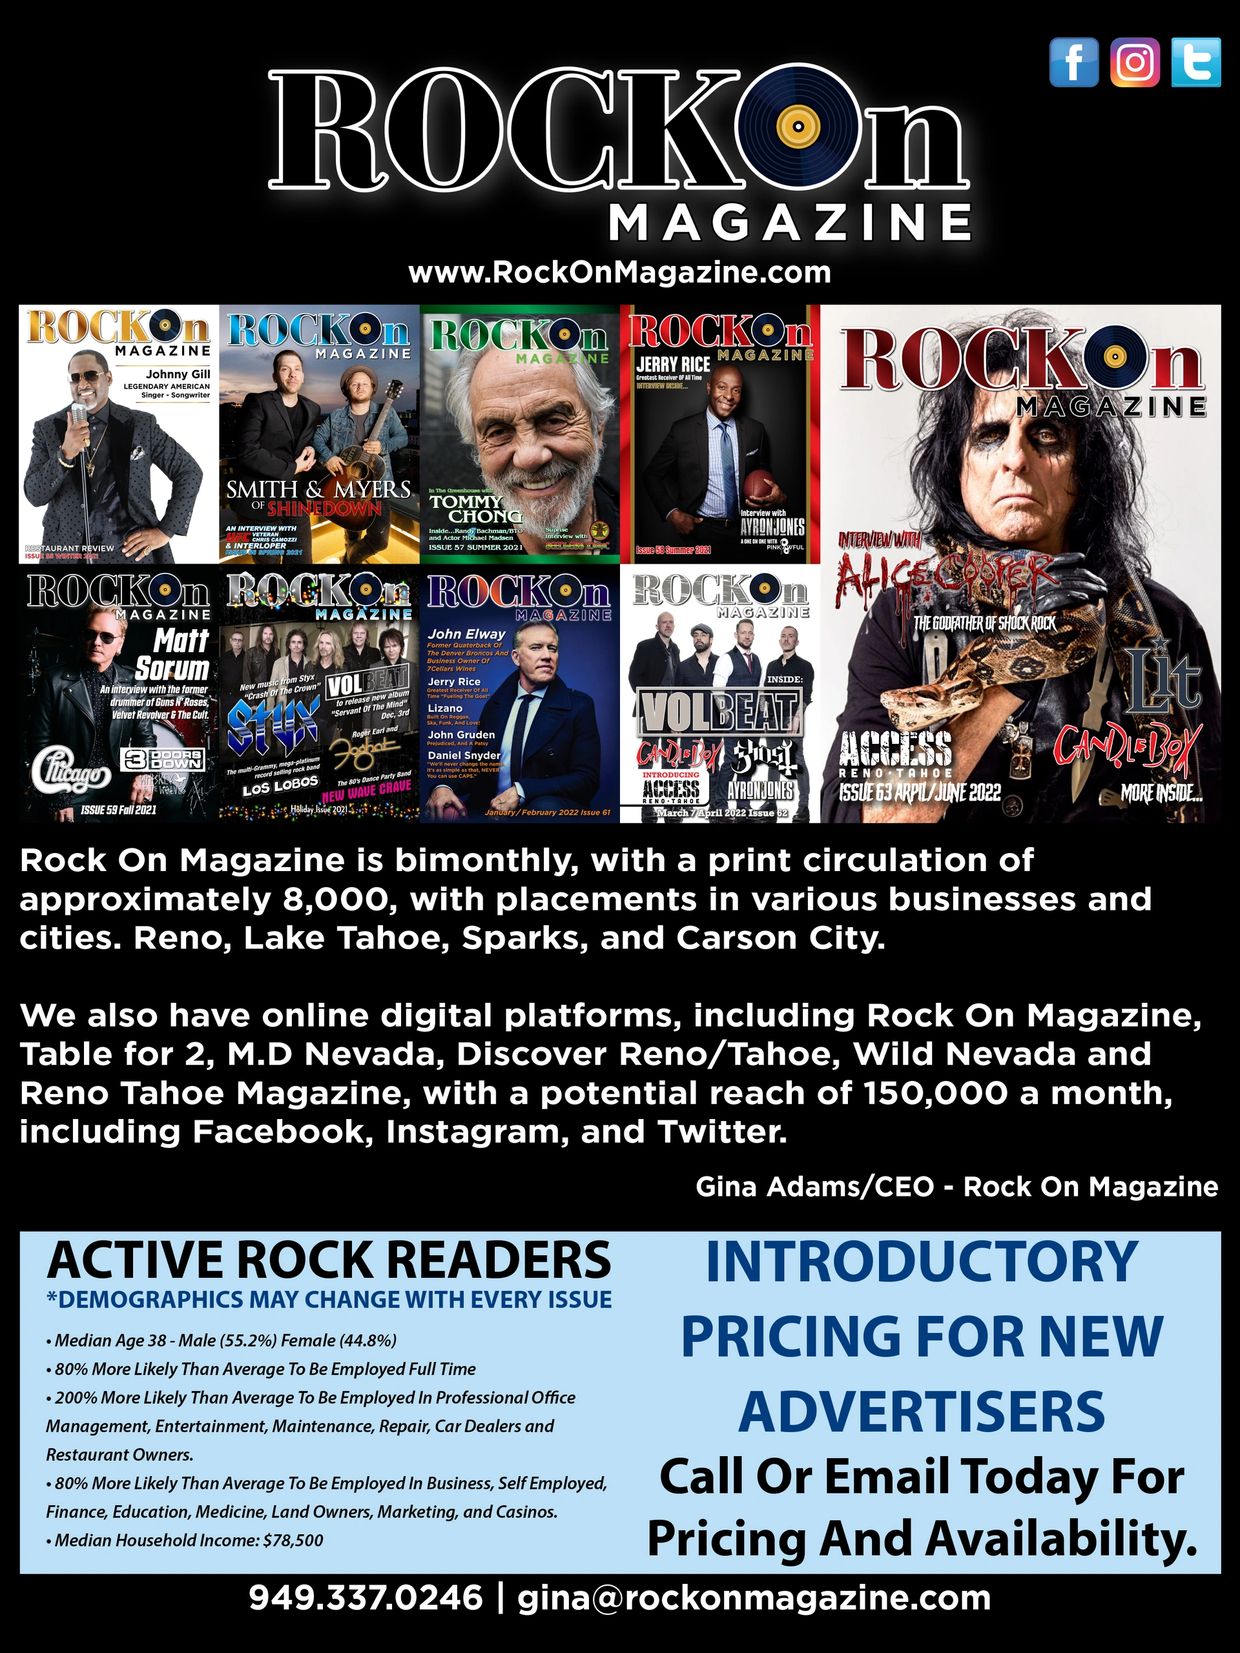 Rock On Magazine - Demographics Page